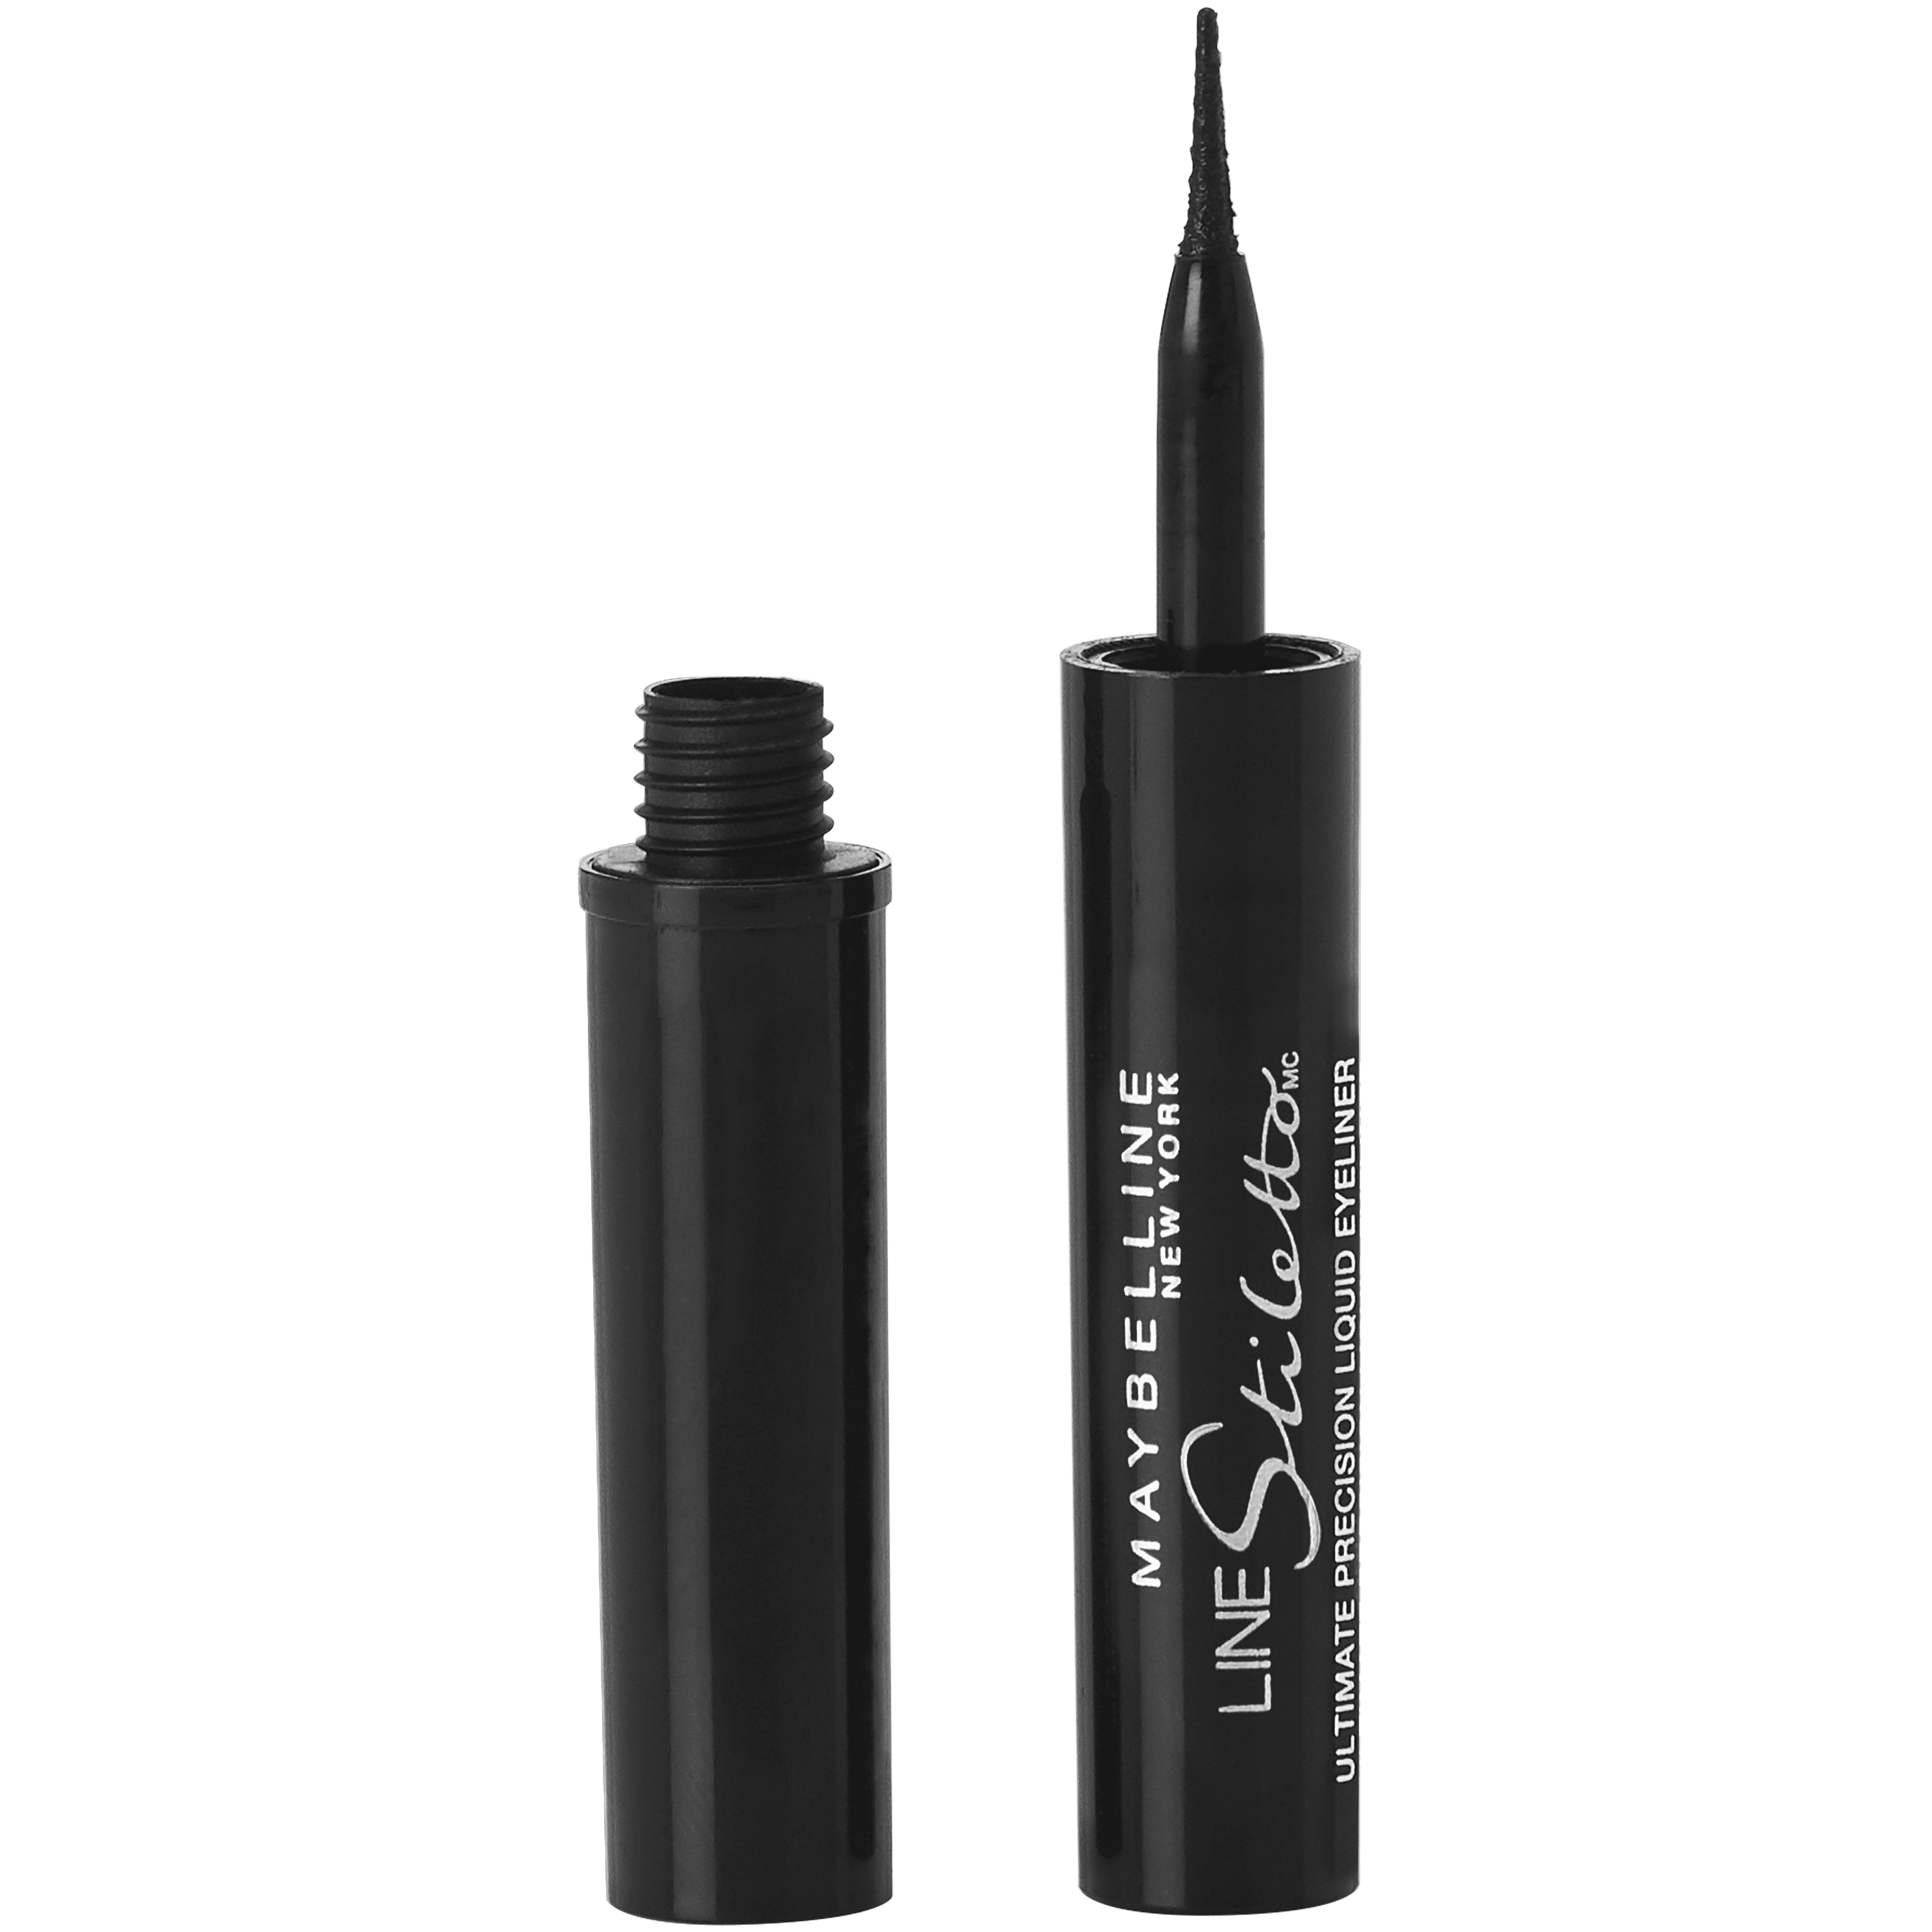 Maybelline Line Stiletto Ultimate Precision Liquid Eyeliner, Blackest Black - image 1 of 6